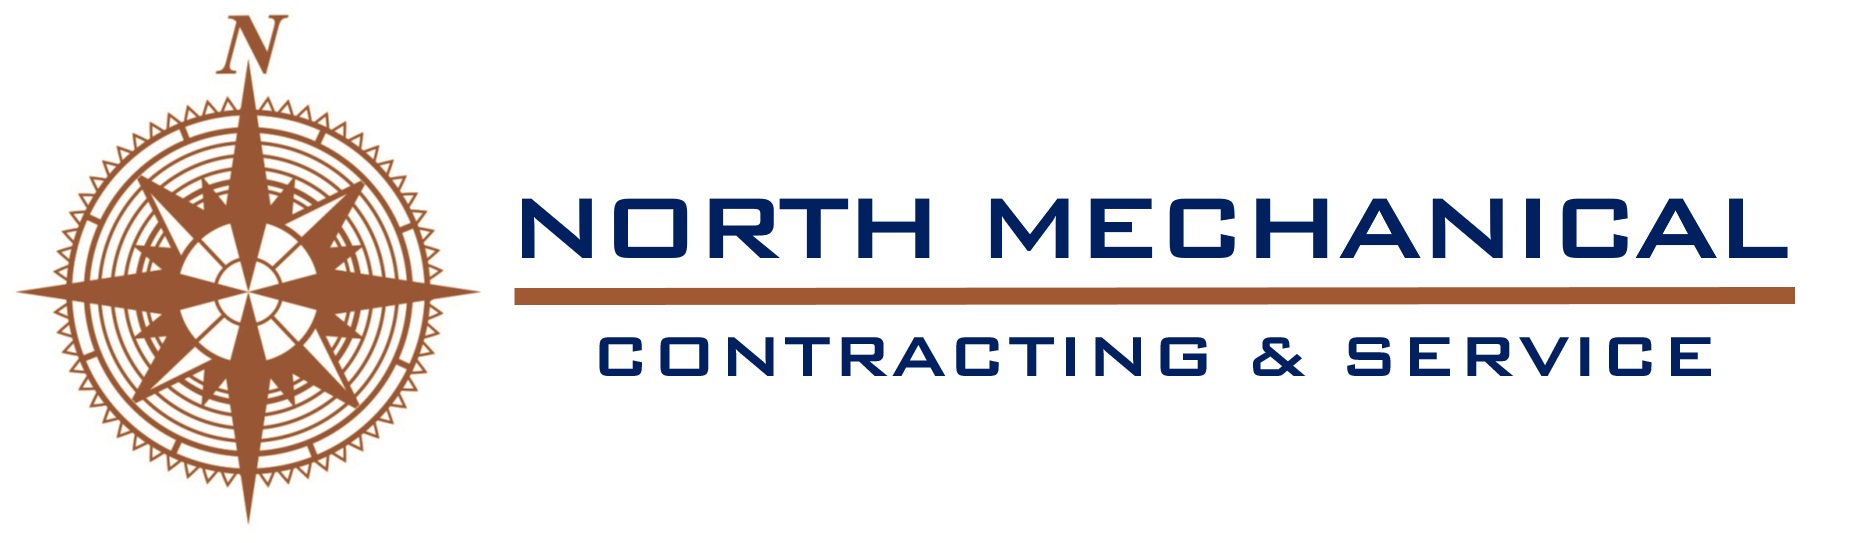 North Mechanical logo